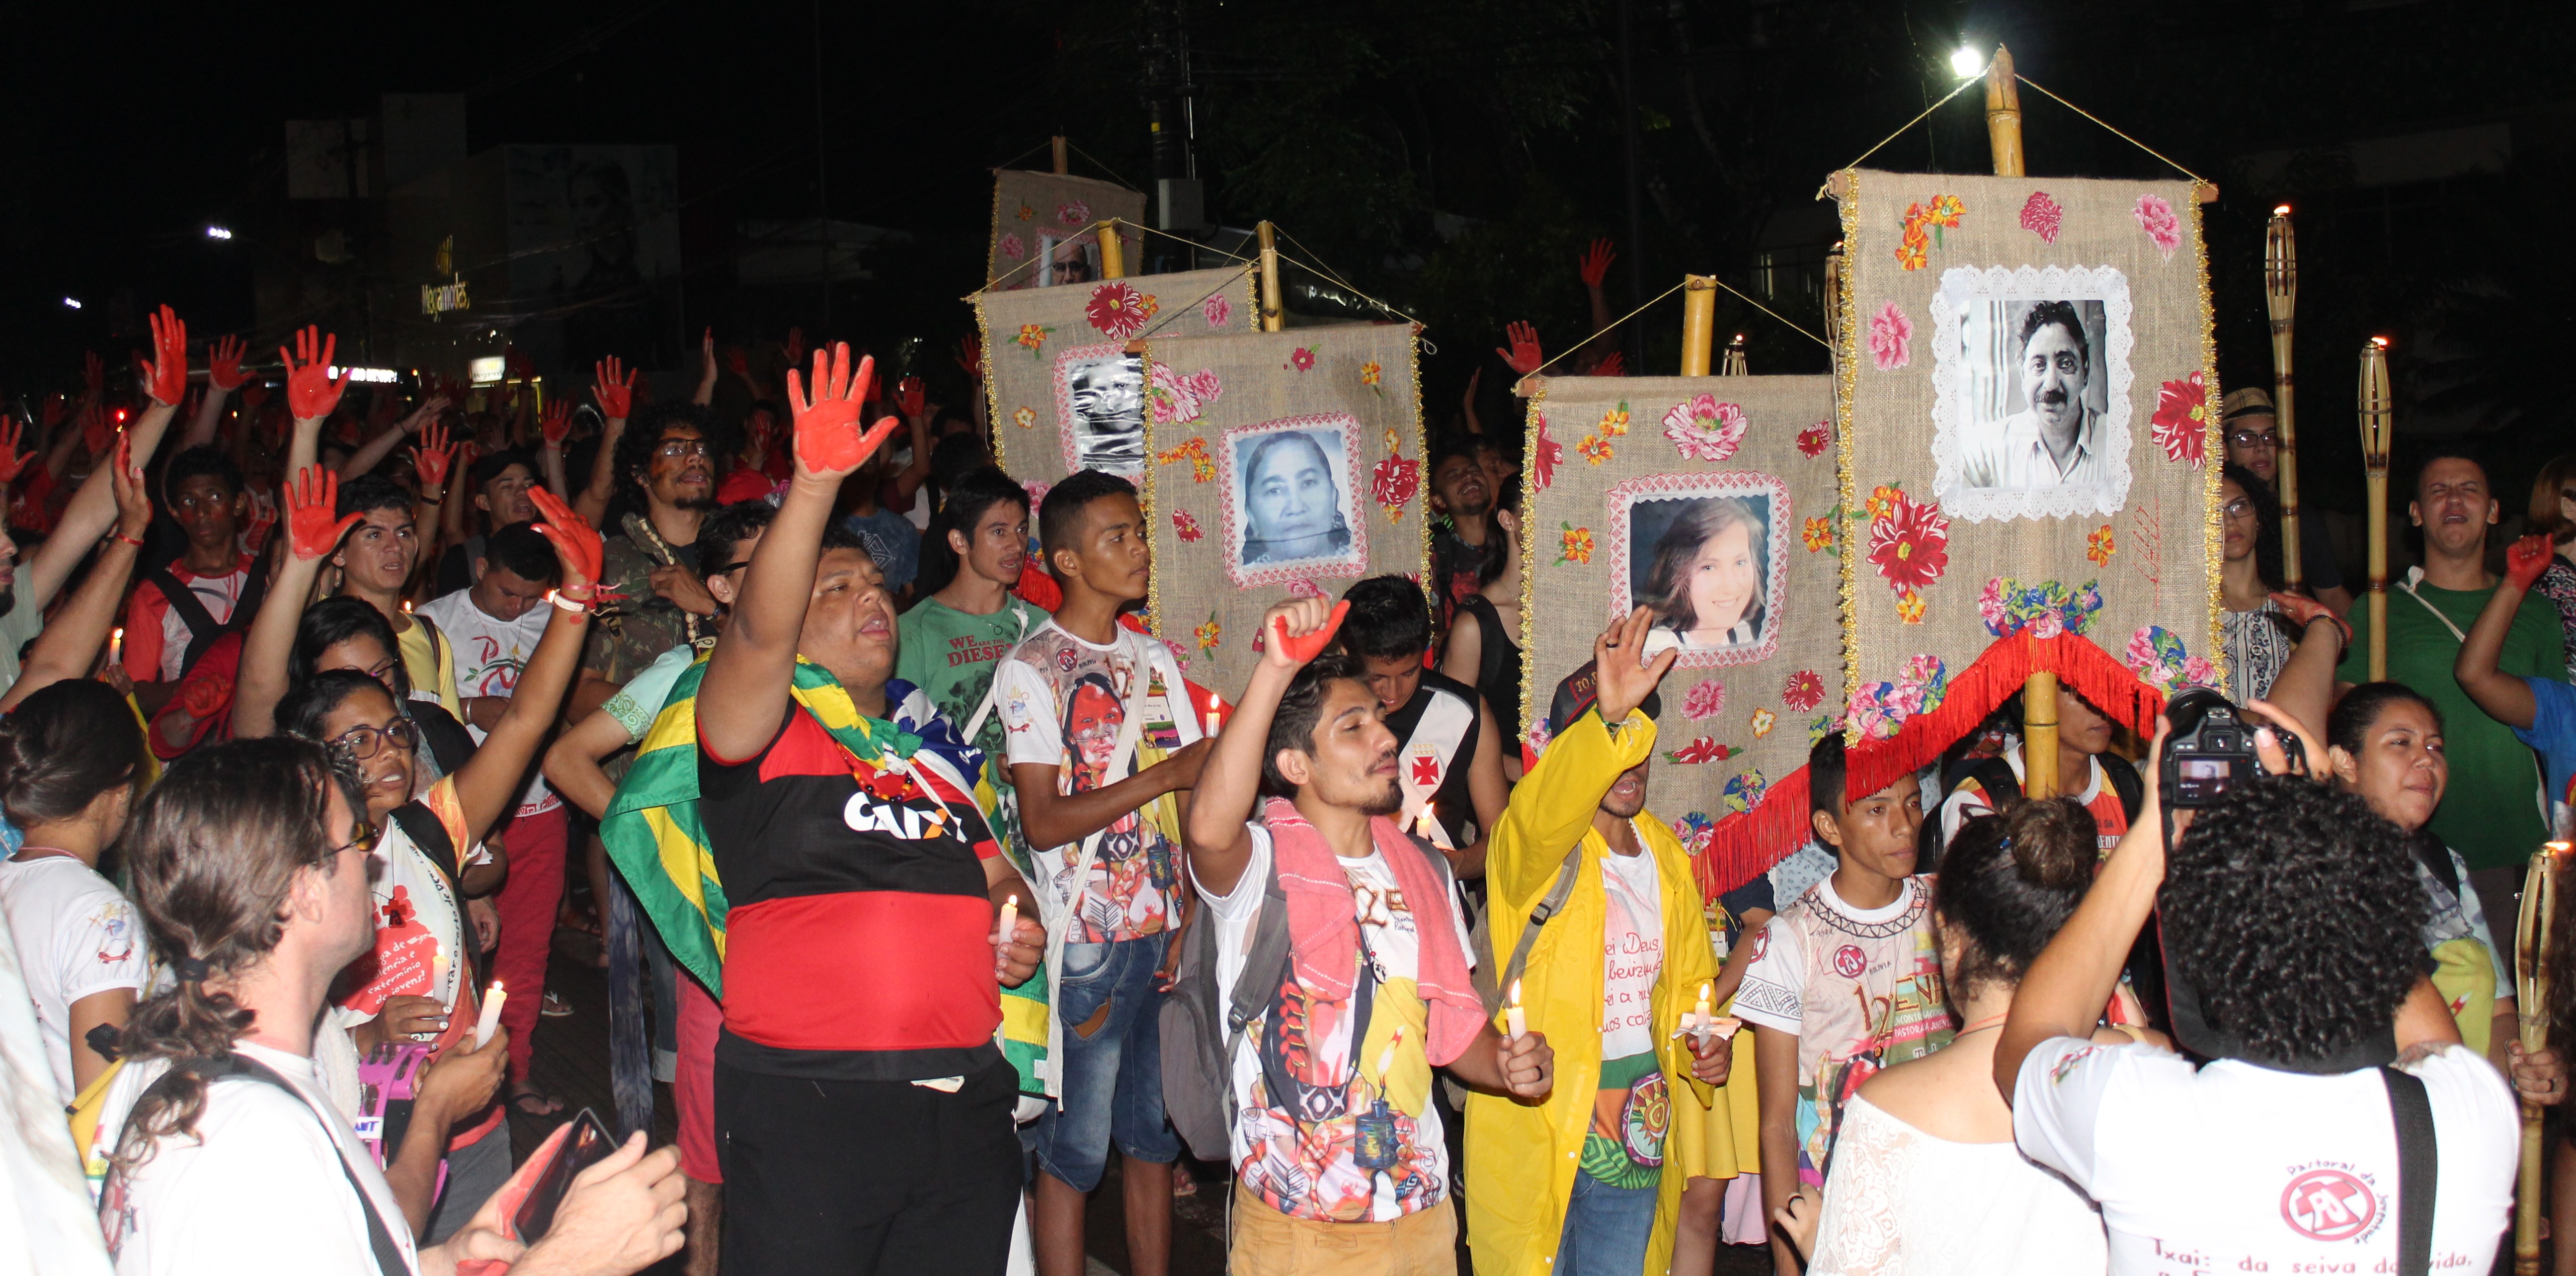  Centenas de jovens ocupam as ruas de Rio Branco para a Romaria dos Mártires